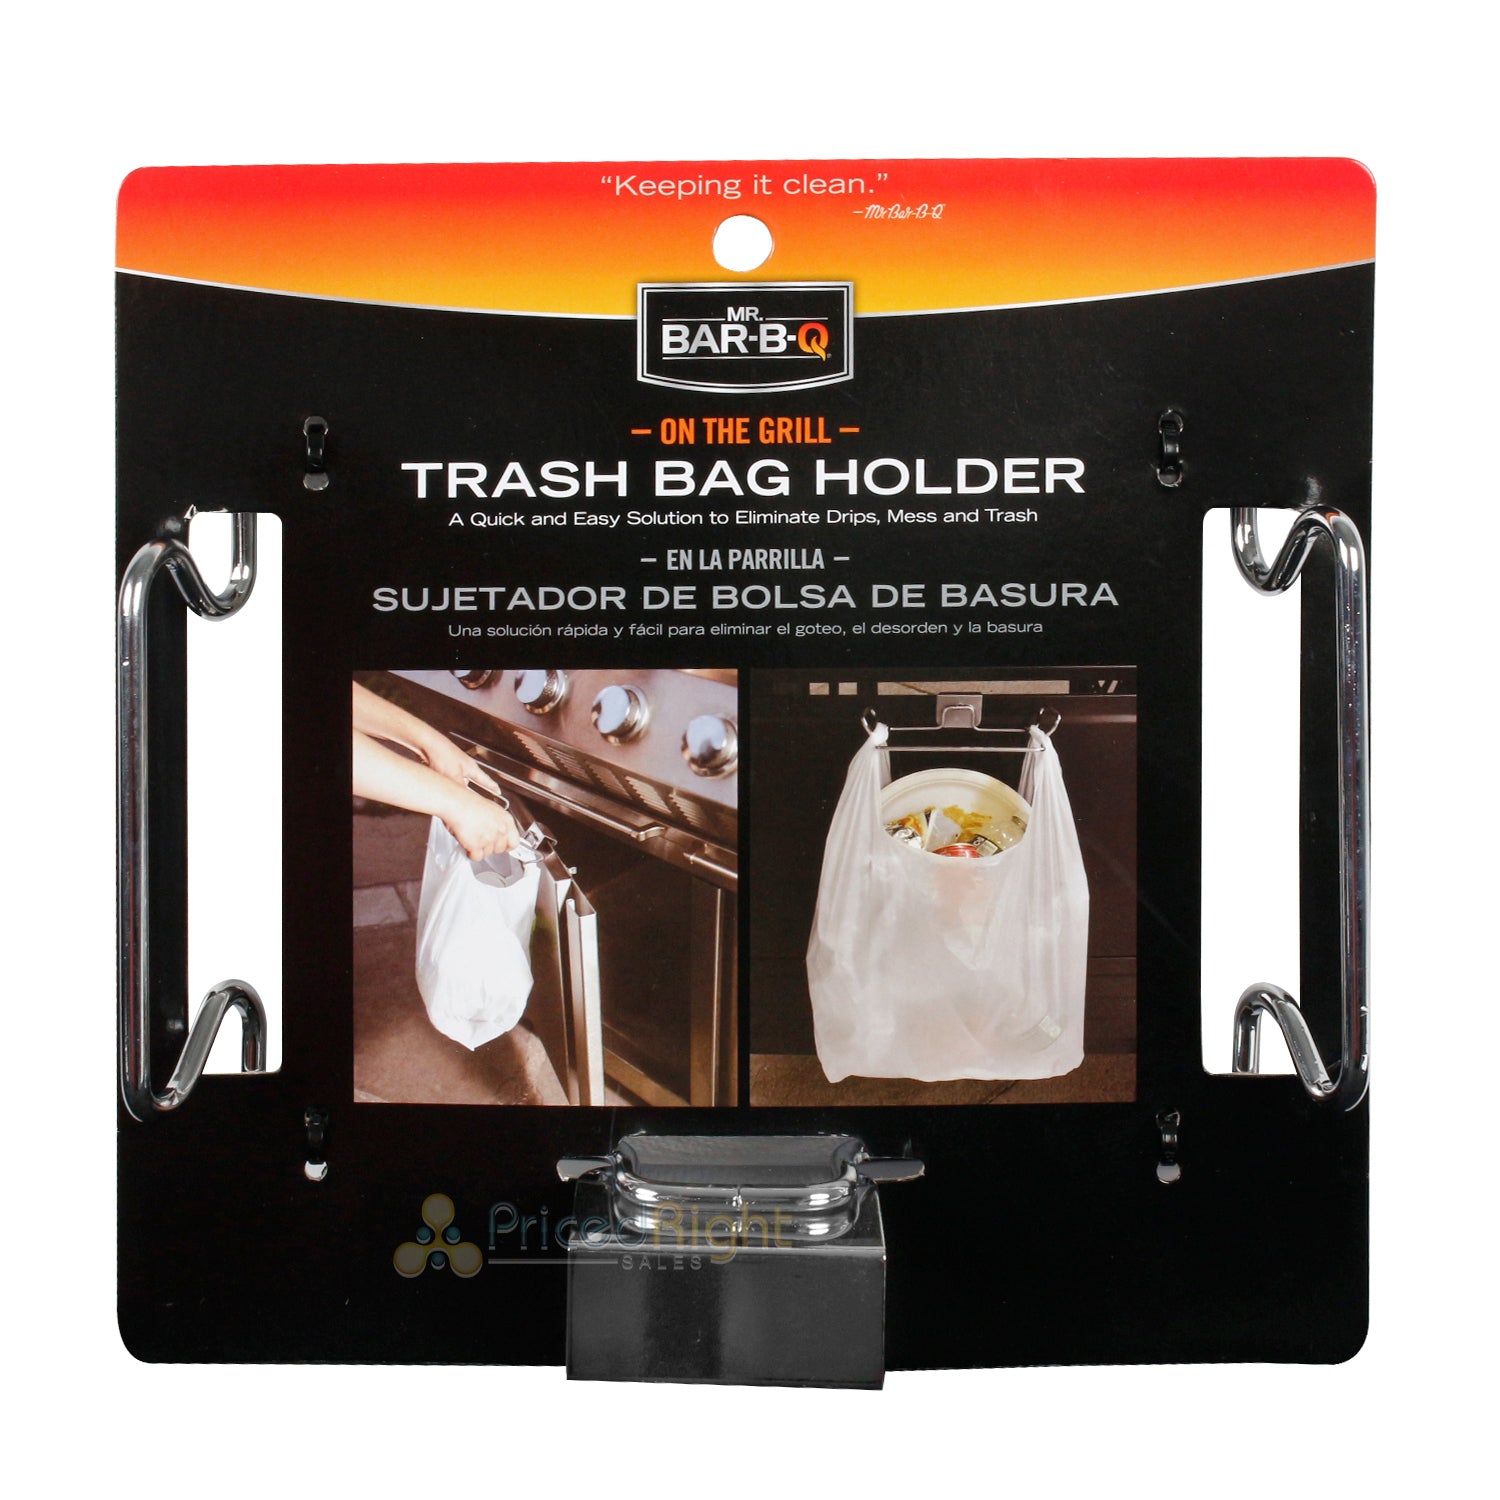 Mr Bar-B-Q Grill-Mount Trash Bag Holder With Chrome Finish For Waste Management